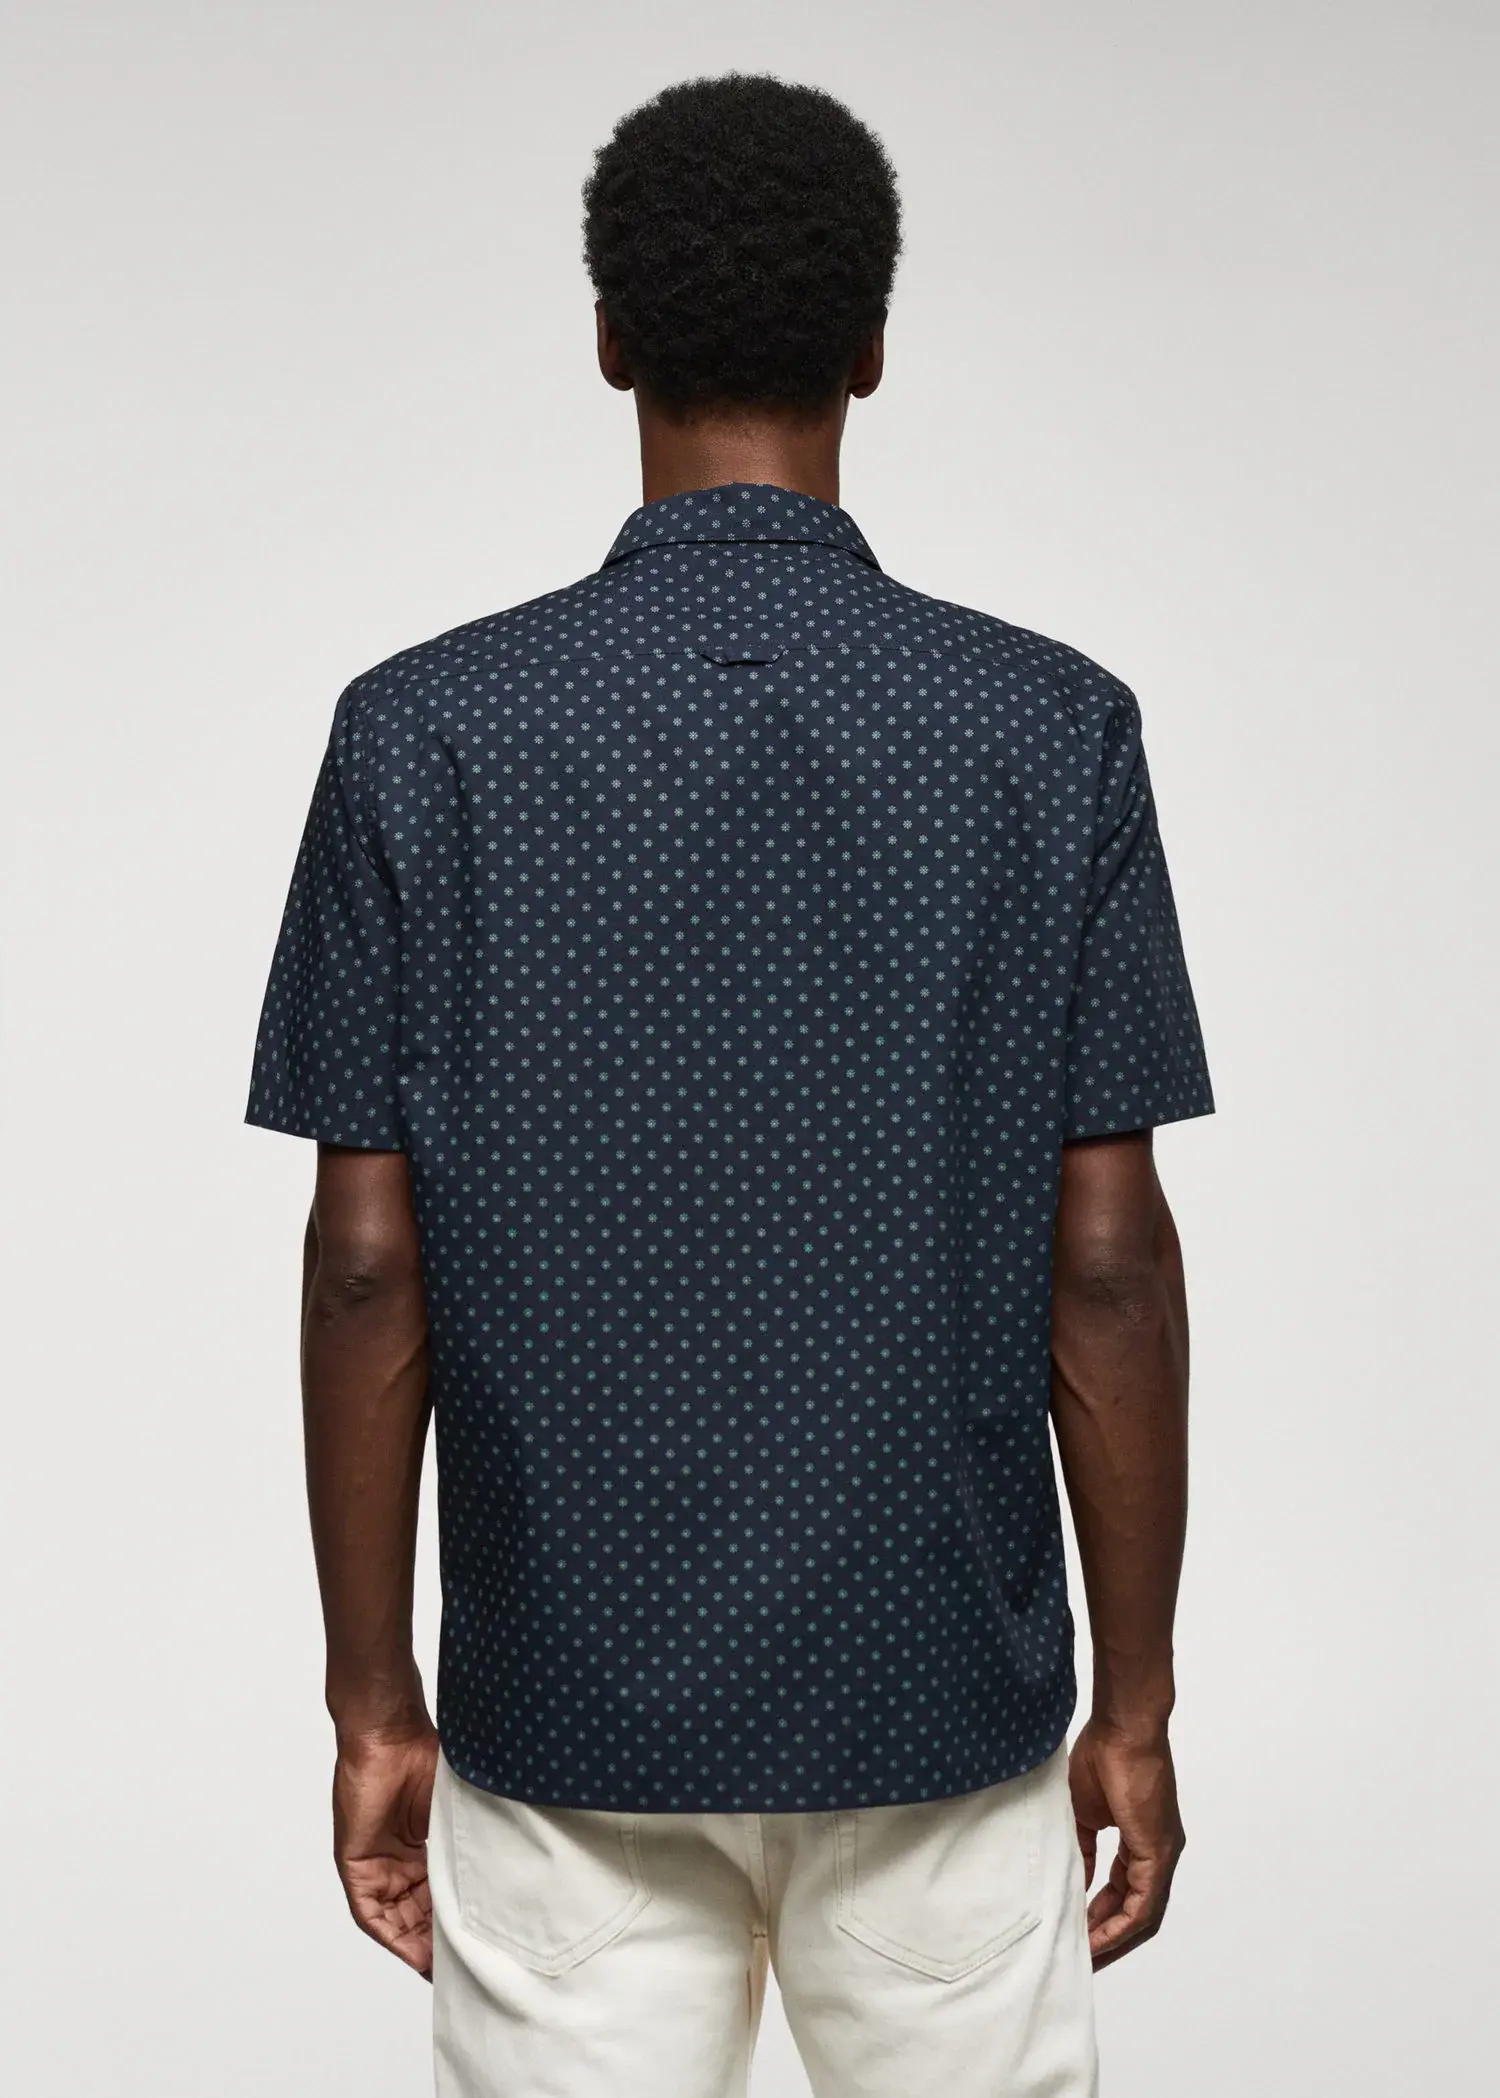 Mango 100% cotton short-sleeved floral shirt. 3